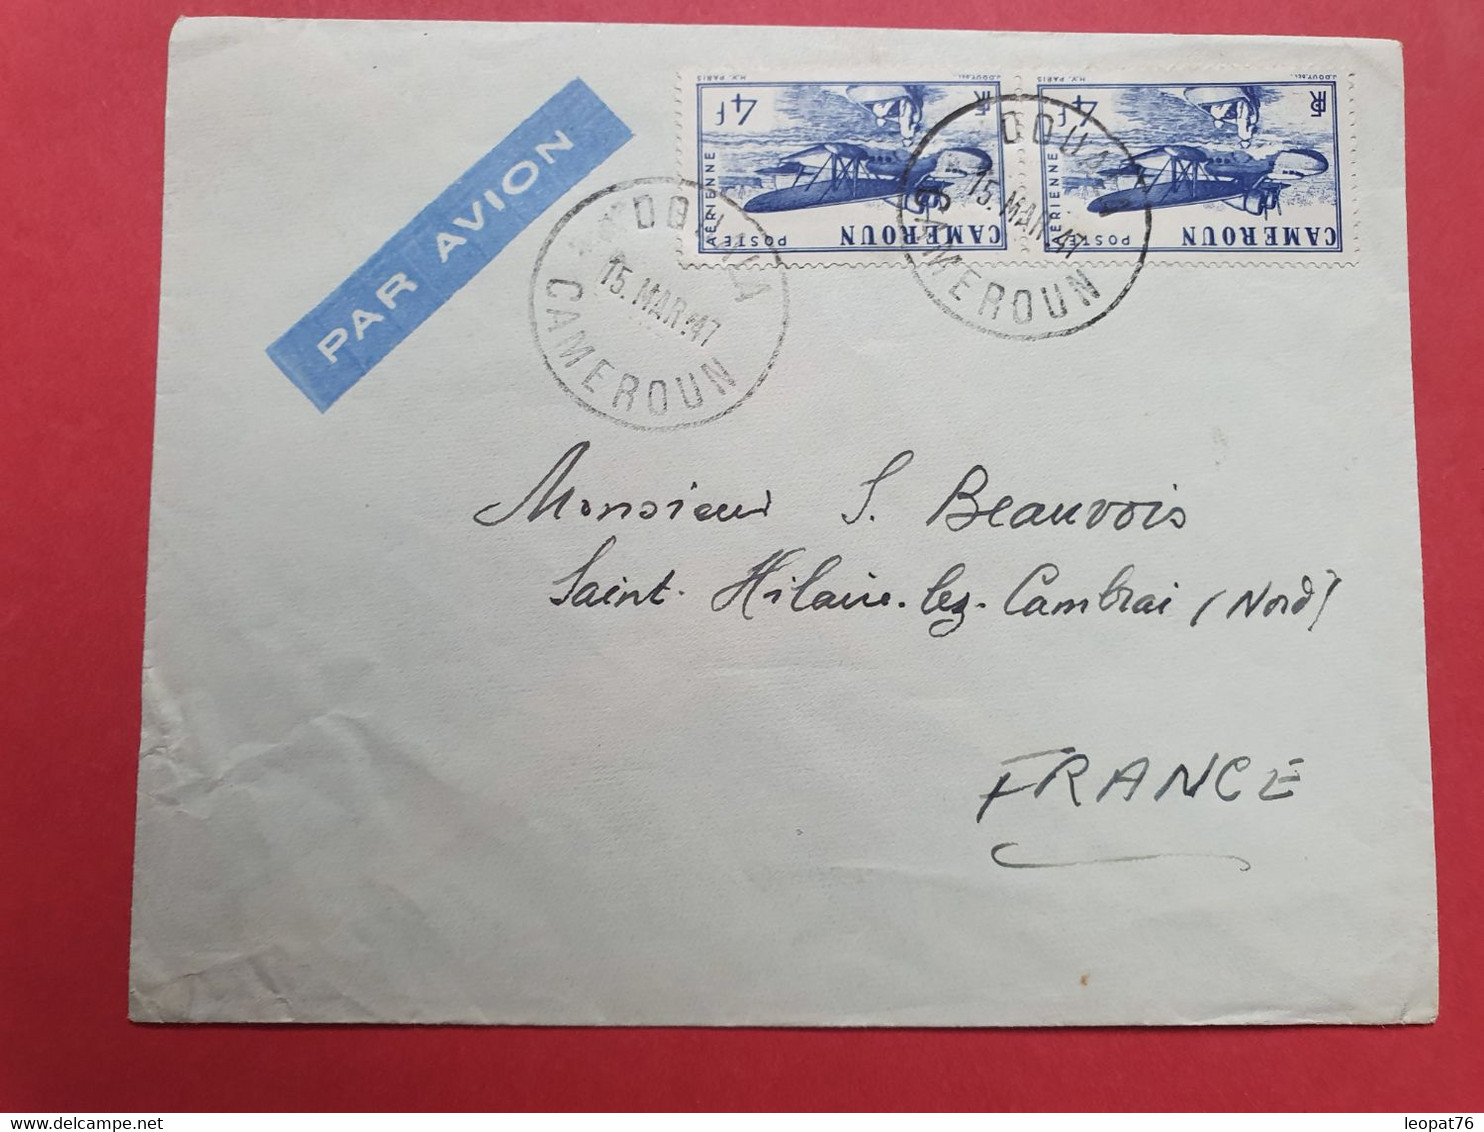 Cameroun - Enveloppe De Douala Pour La France En 1947 - N 33 - Storia Postale